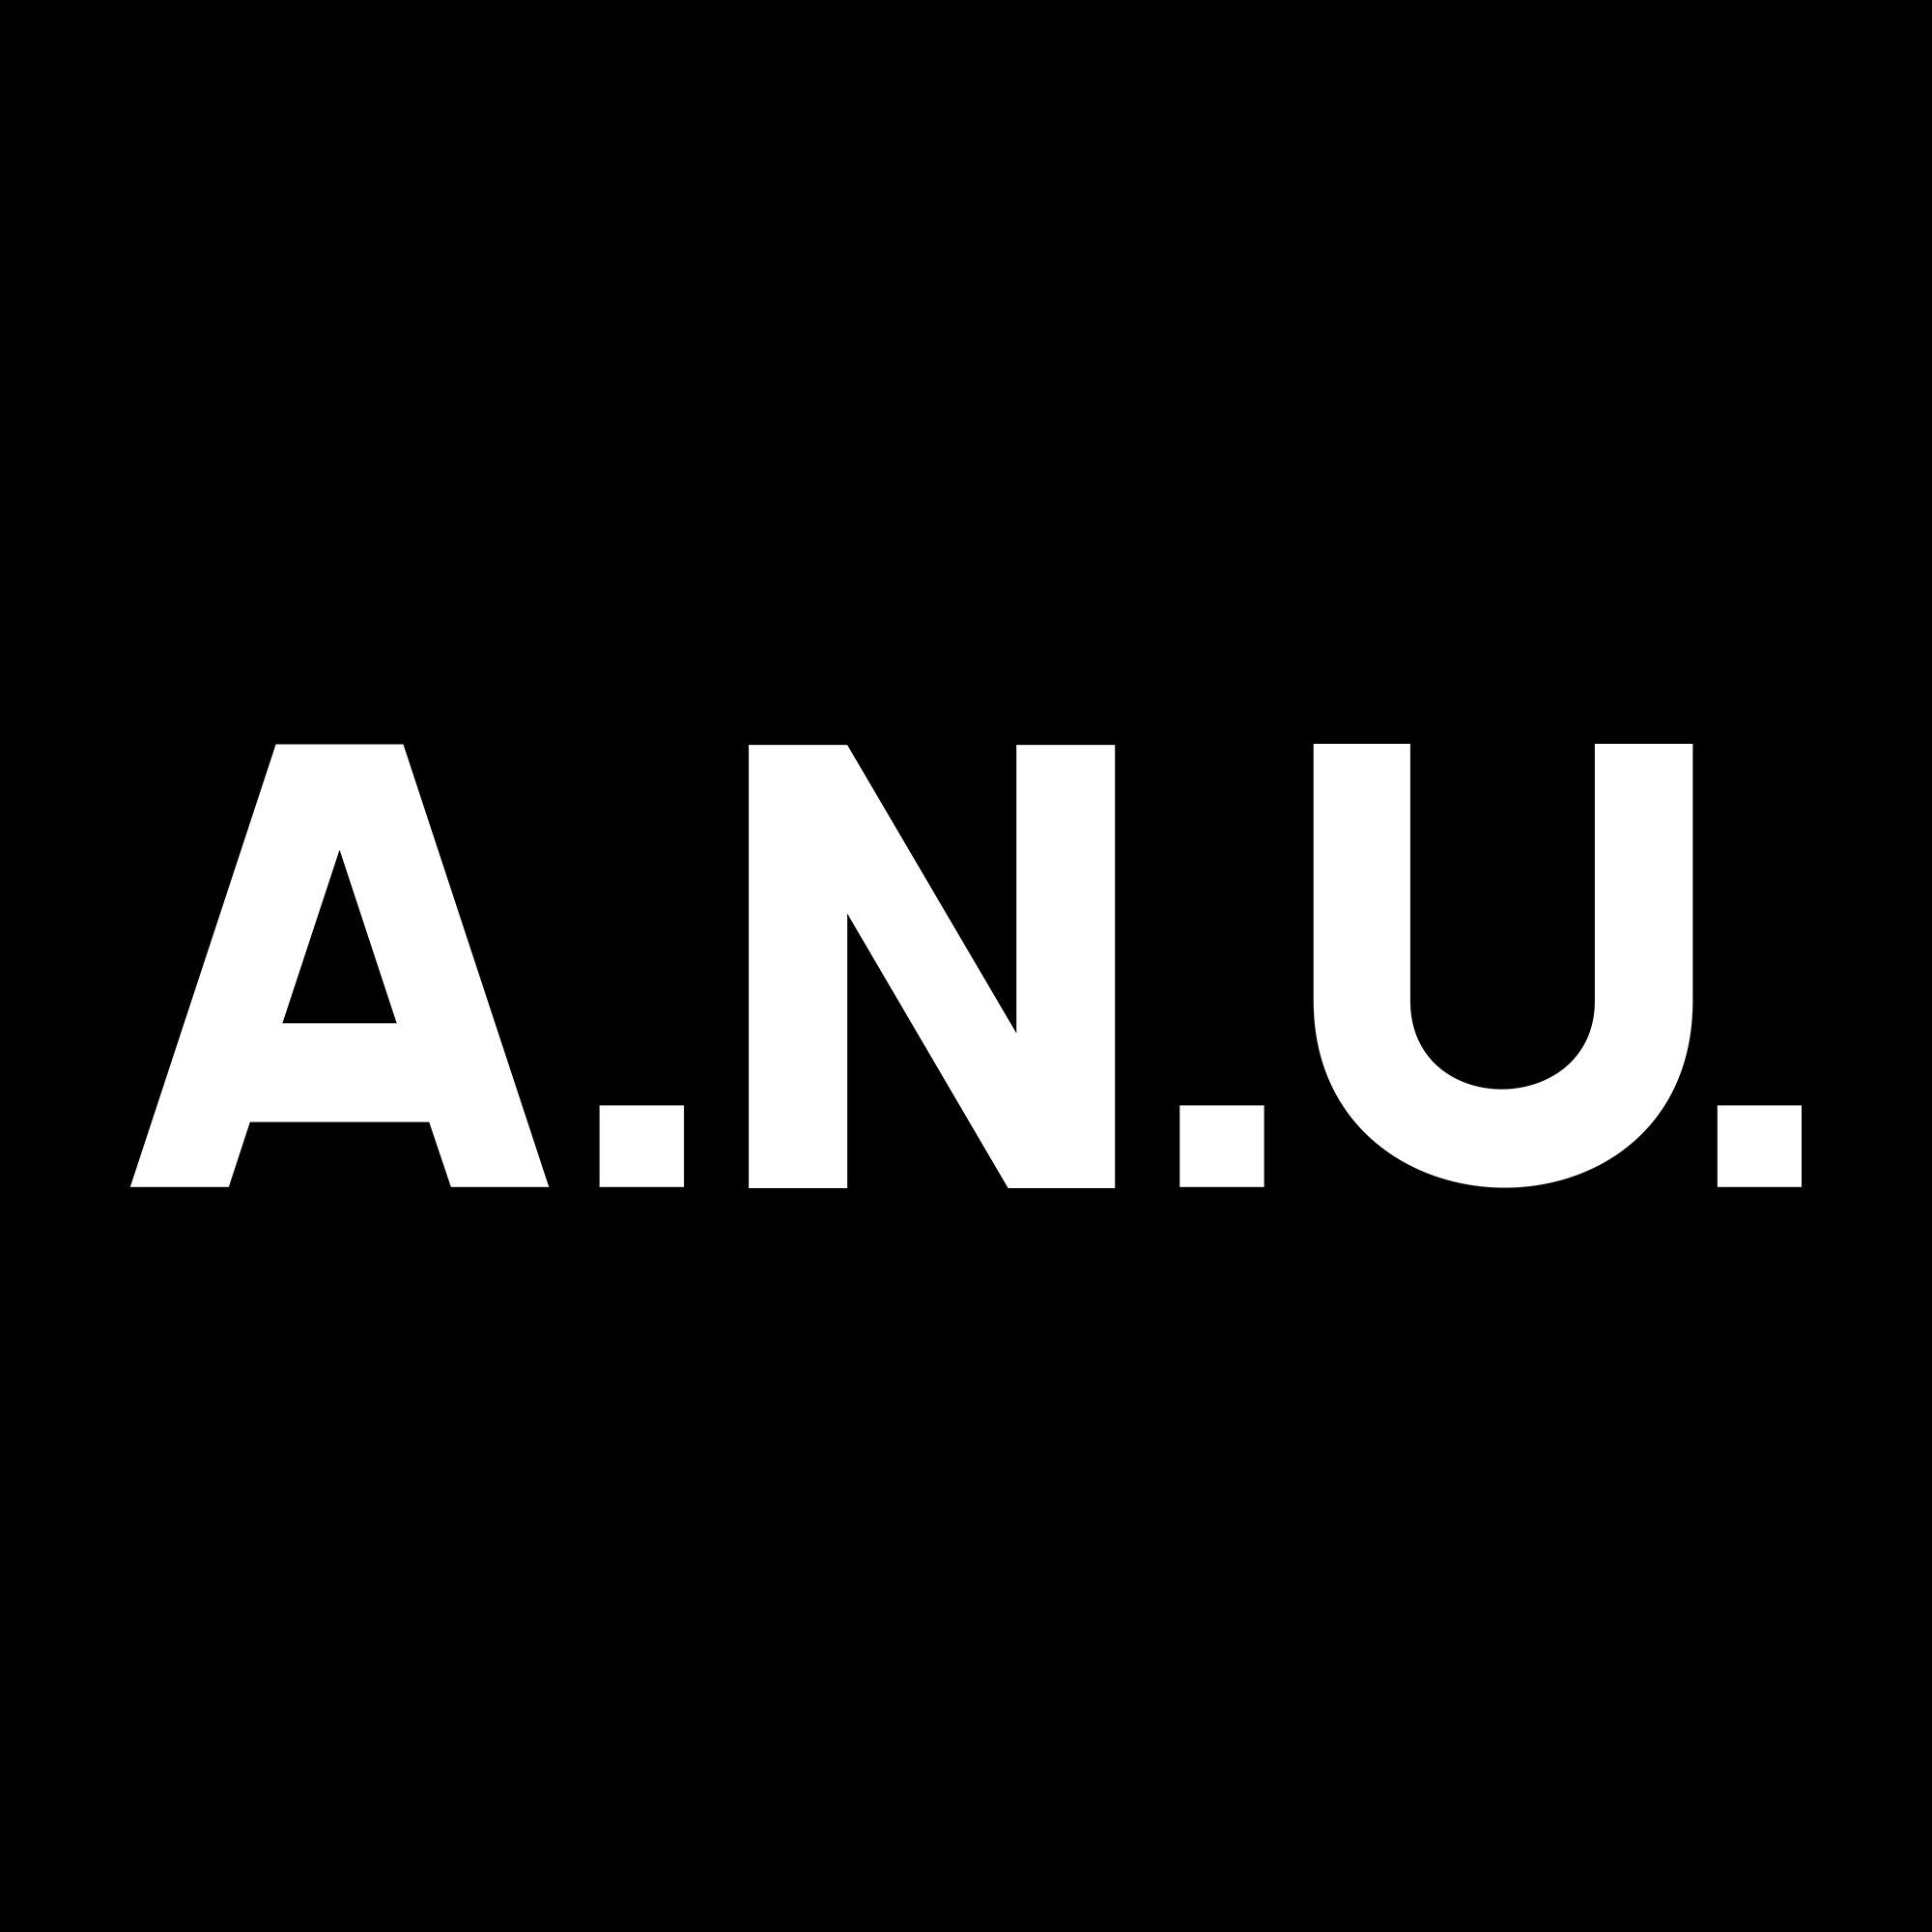 ANU letter logo creative design with vector graphic, ANU simple and modern  logo.:: tasmeemME.com